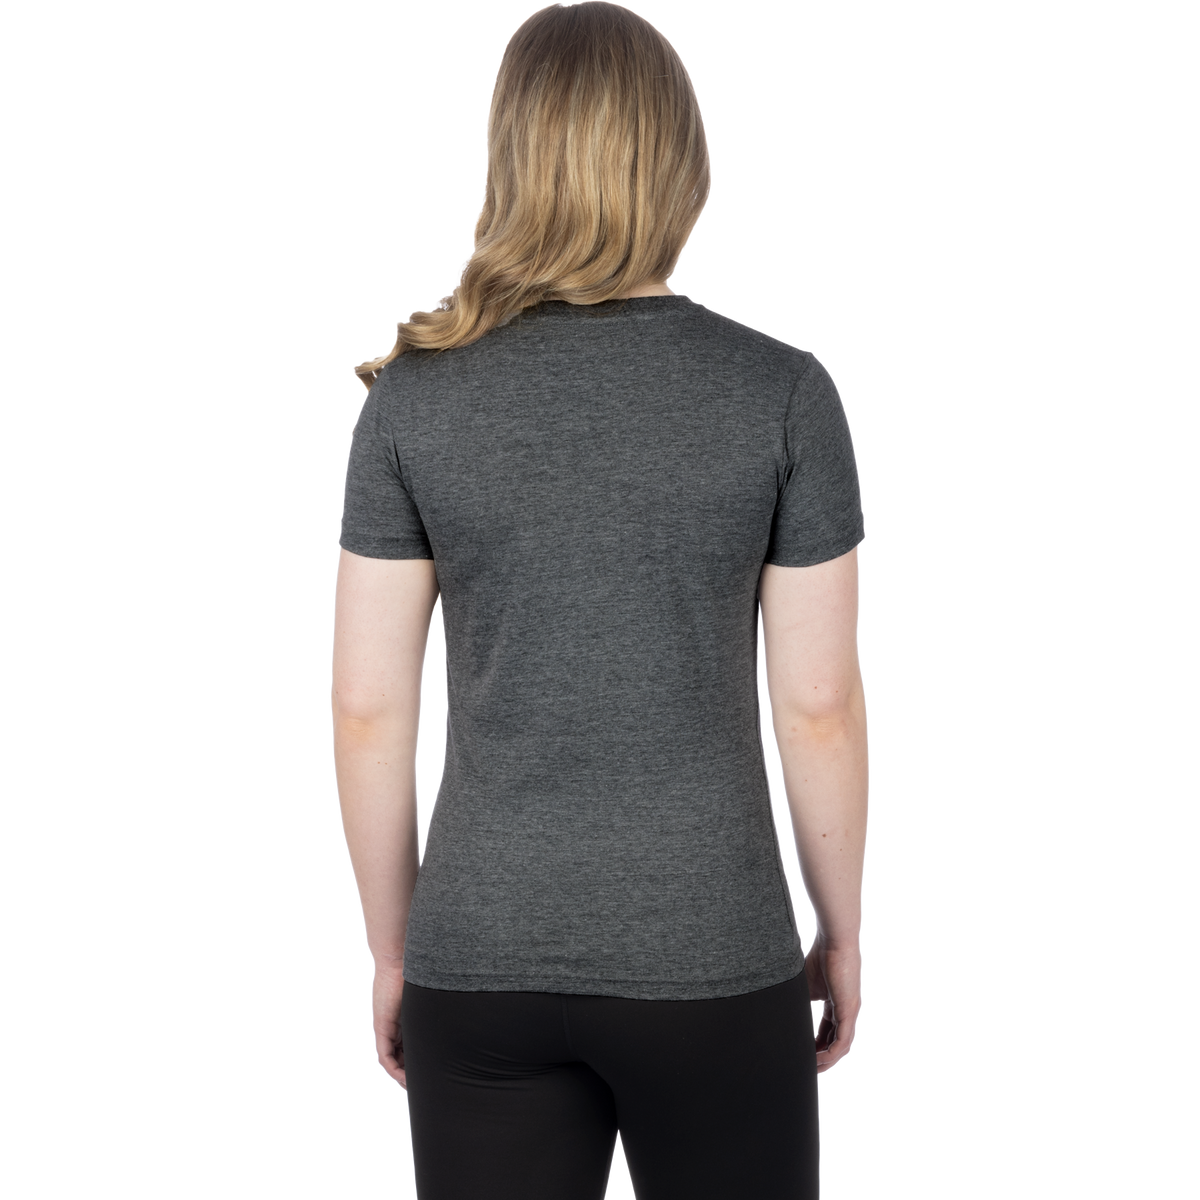 FXR Women&#39;s Race Division Premium T-Shirt - 2024